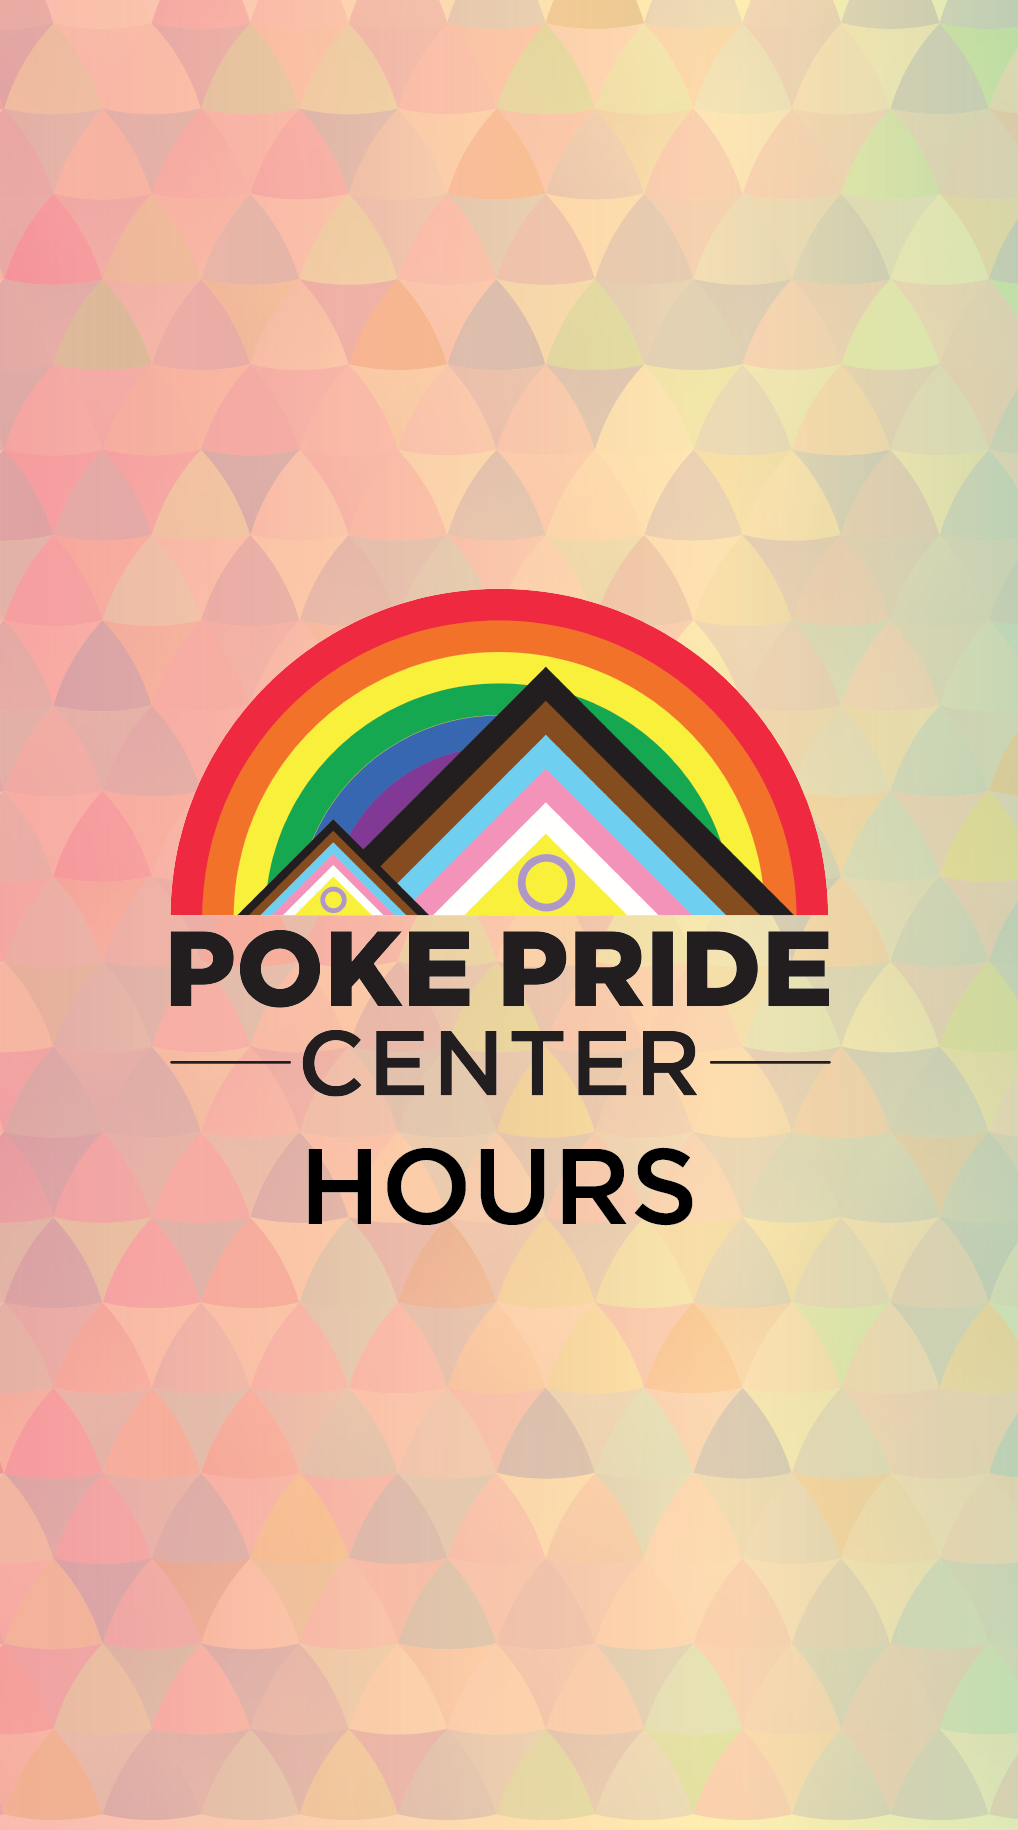 Title: Poke Pride Center Hours 